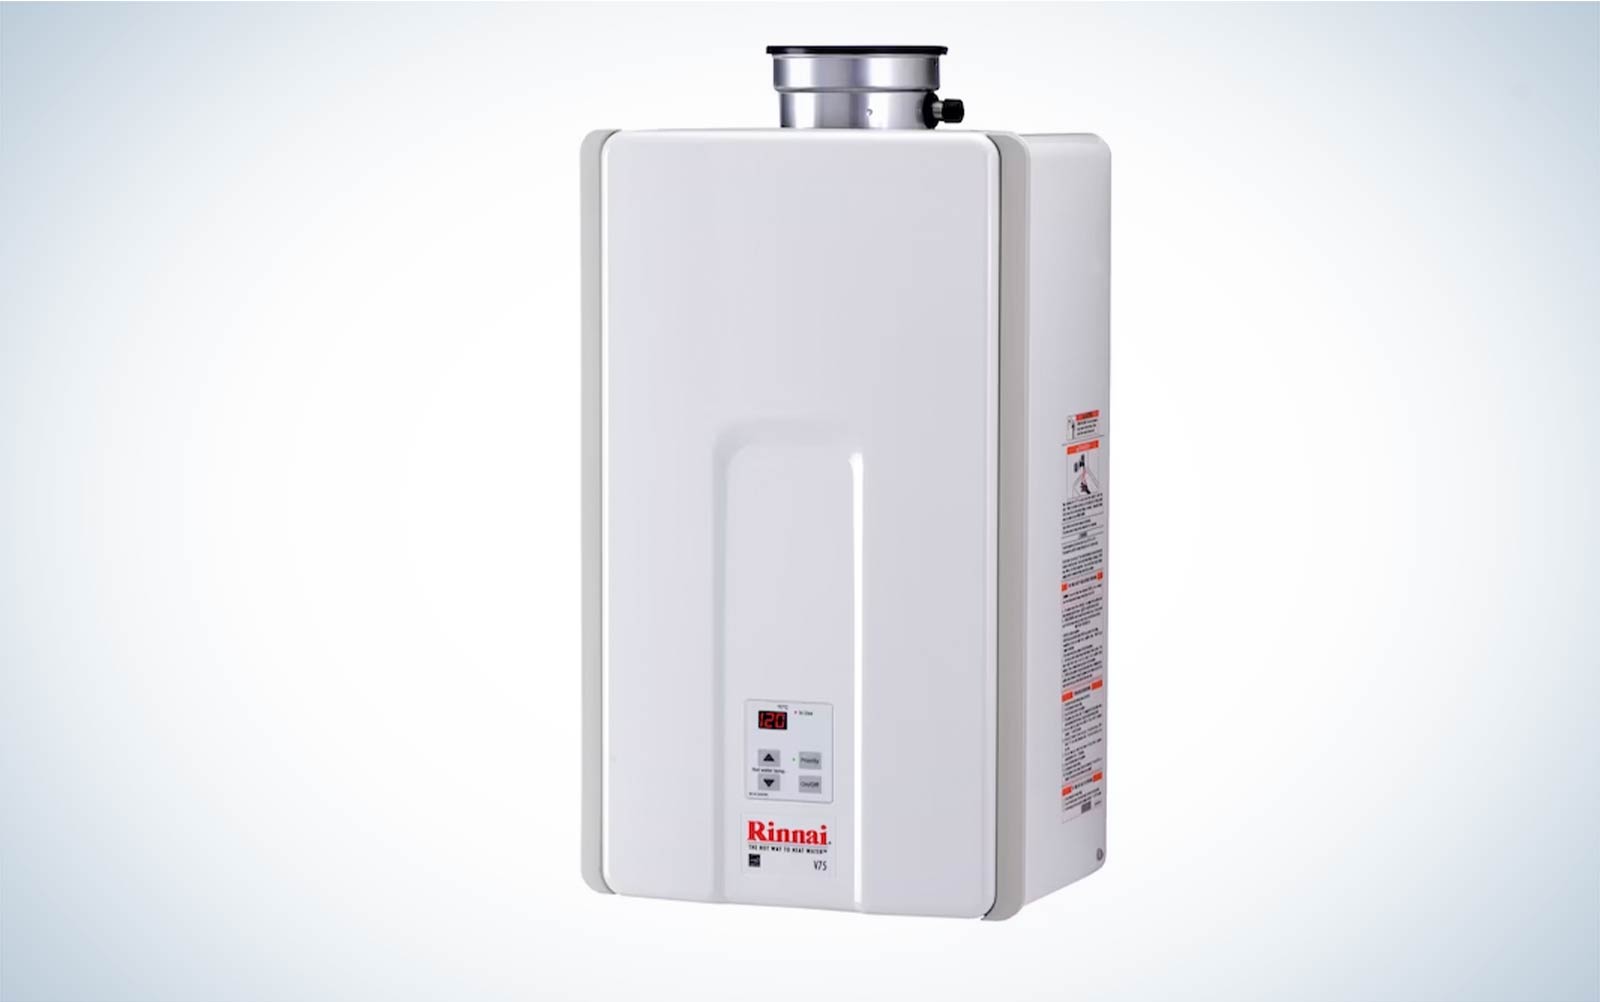 https://www.popsci.com/uploads/2023/10/31/Rinnai-Natural-Gas-Tankless-Water-Heater.jpg?auto=webp&width=800&crop=16:10,offset-x50